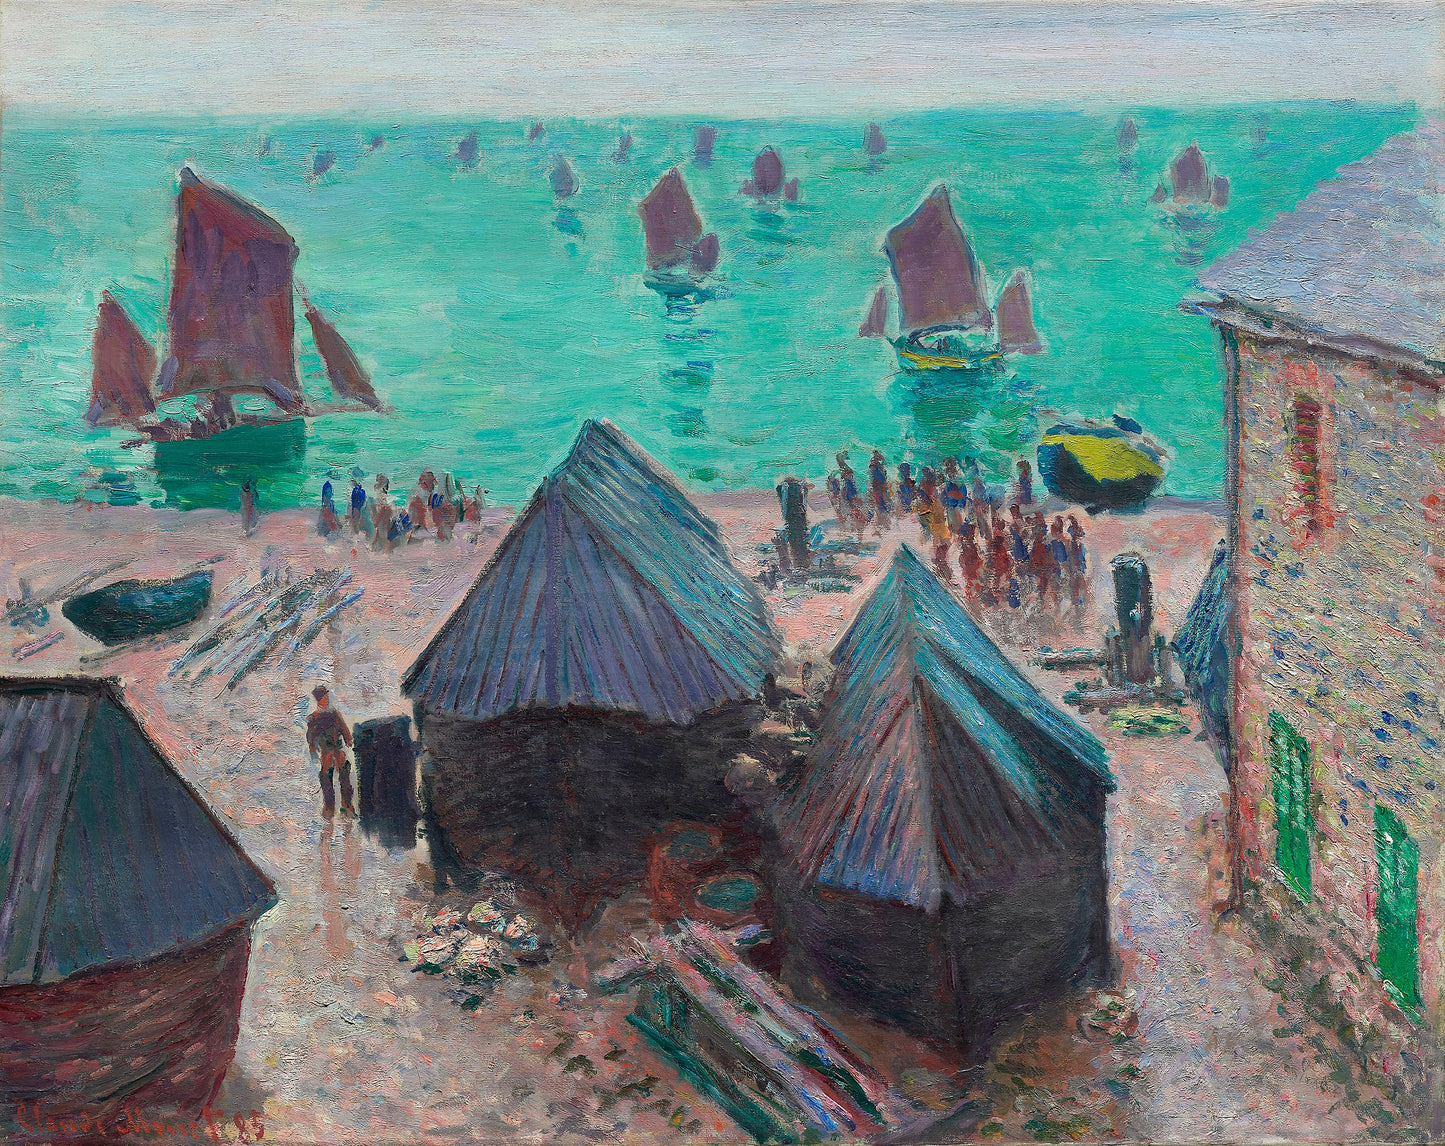 Claude Monet Impressionist Paintings Set 5 [27 Images]